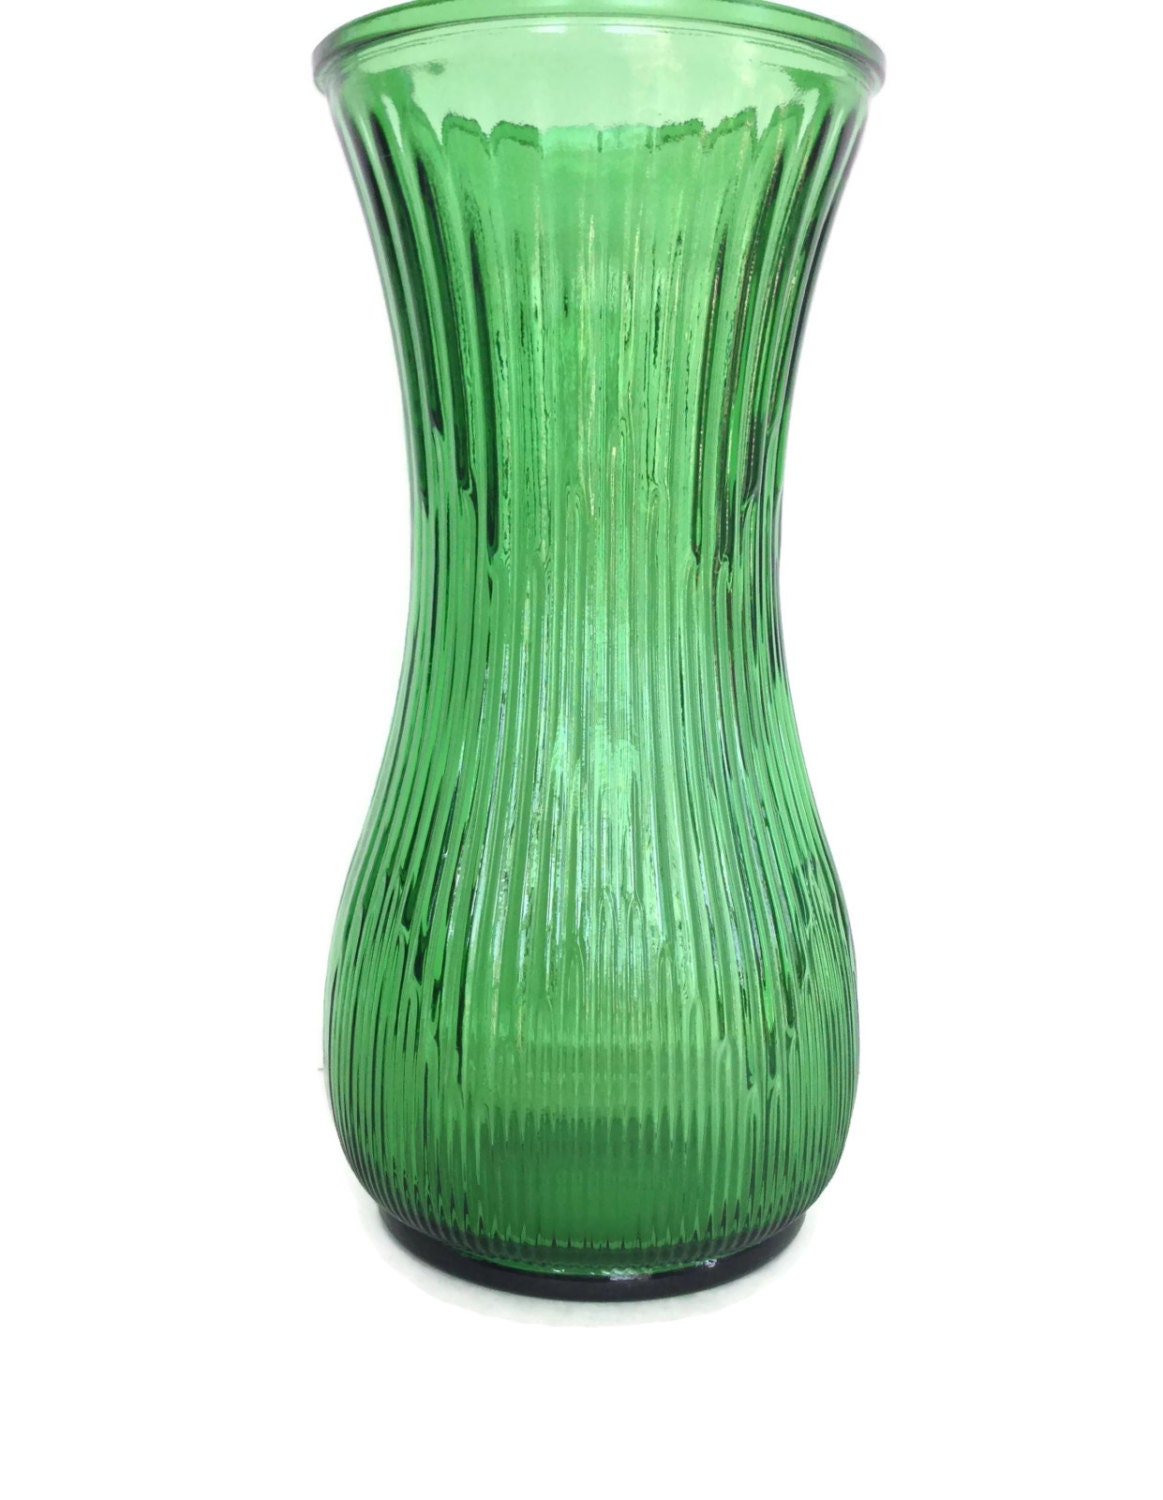 Vintage Glass Vase Green Ribbed Texture Hoosier